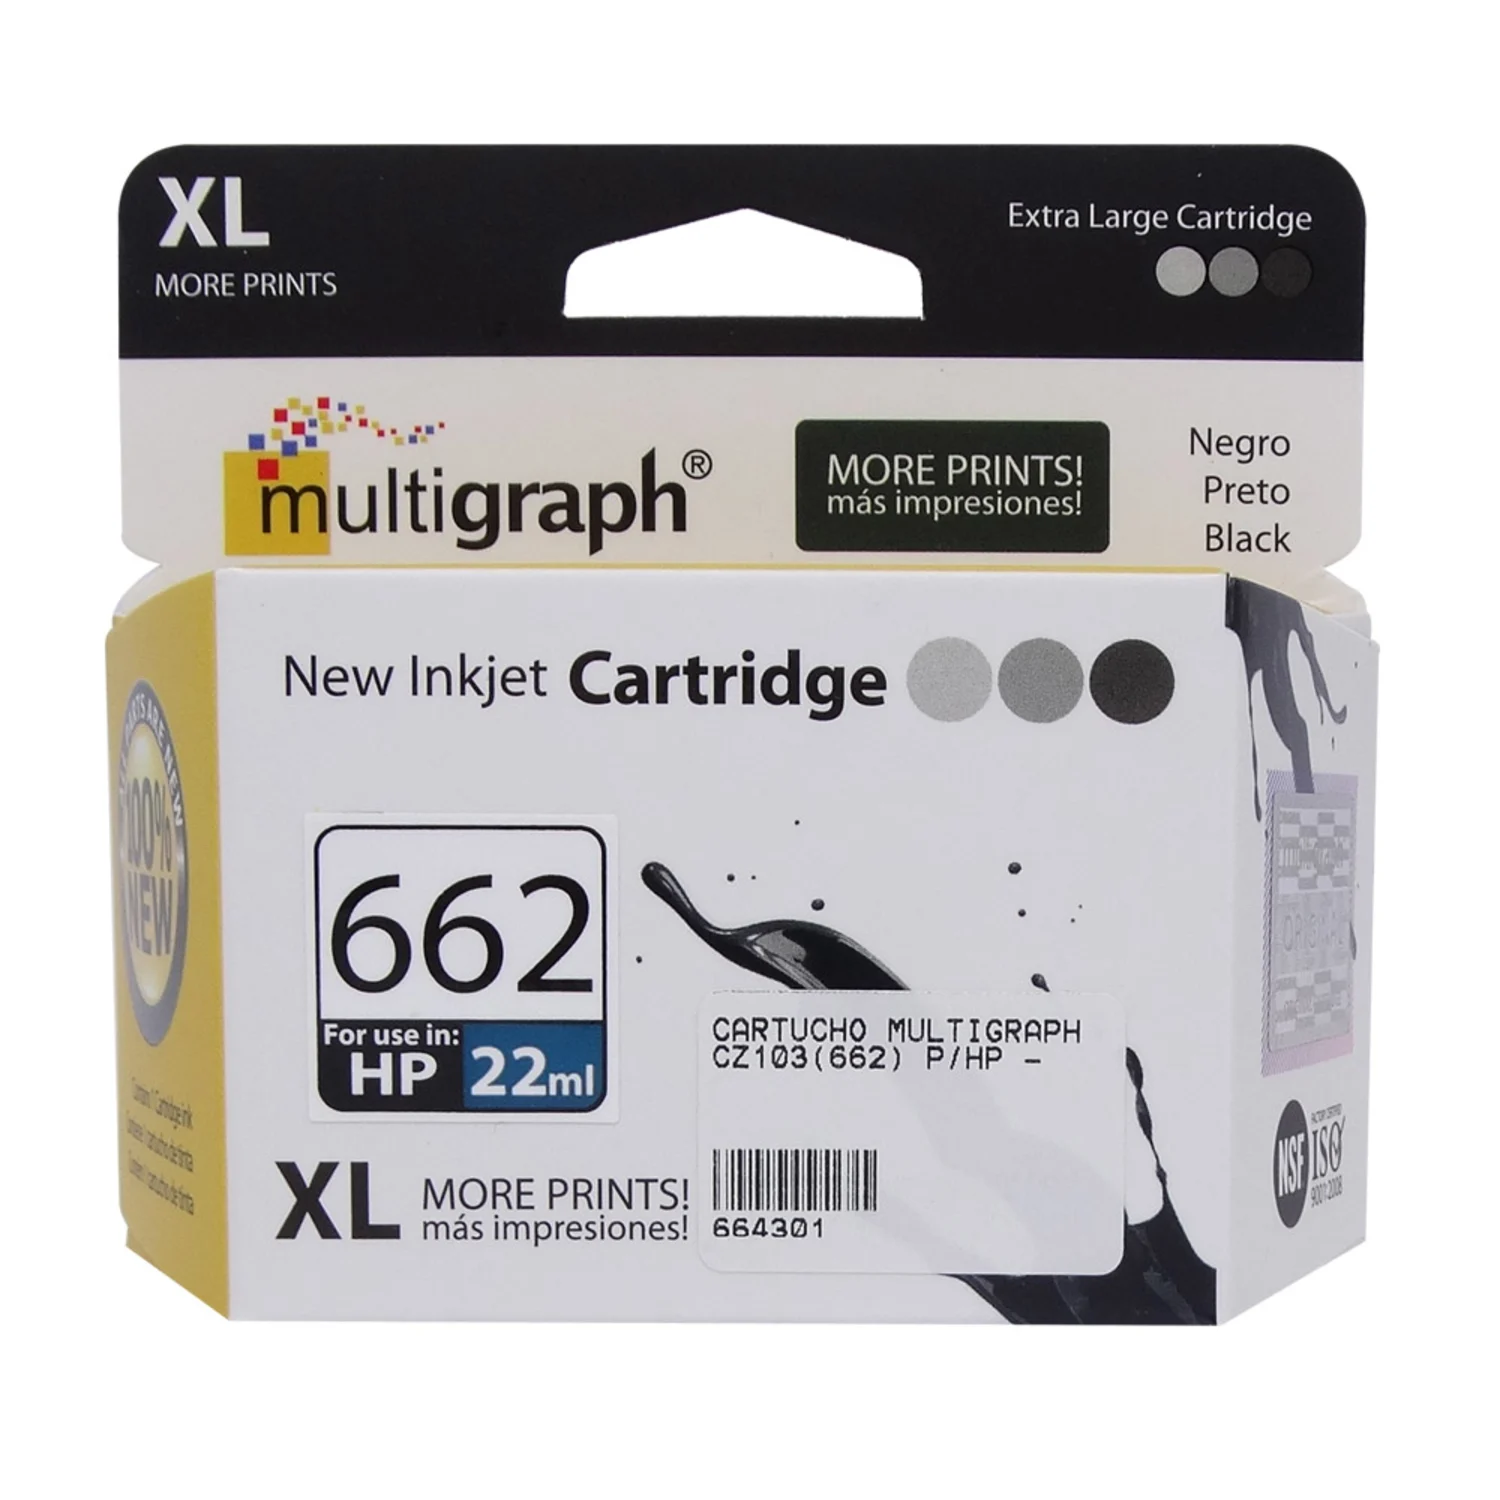 Cartucho Multigraph 662XL para Impressoras HP - Preto (CZ103AL)